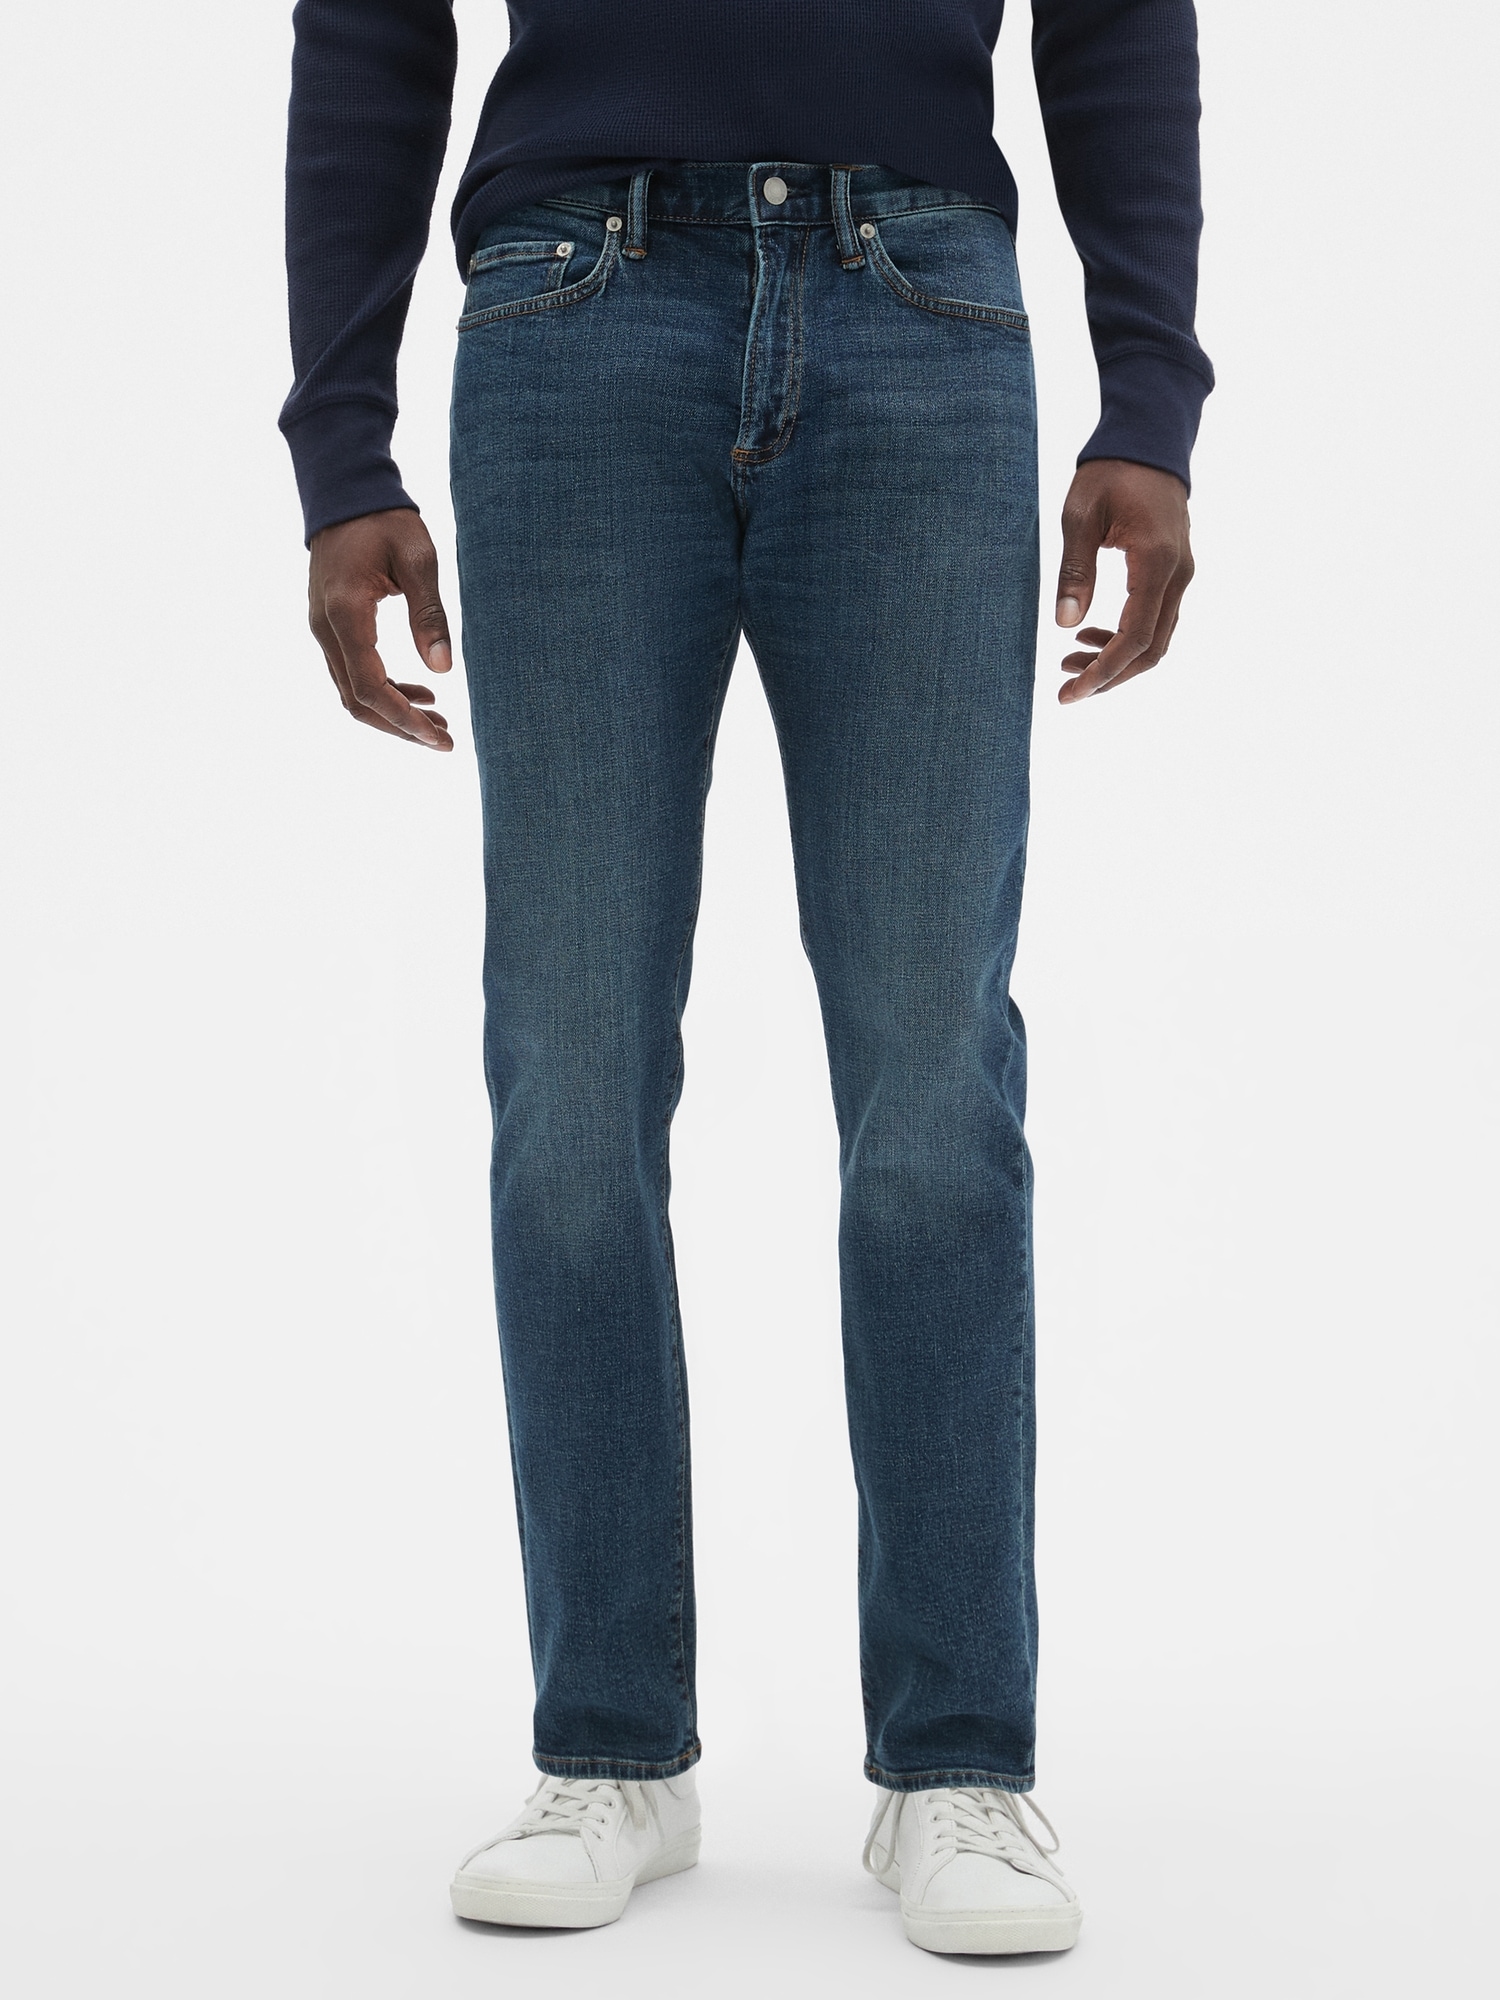 best fitting jeans for older men